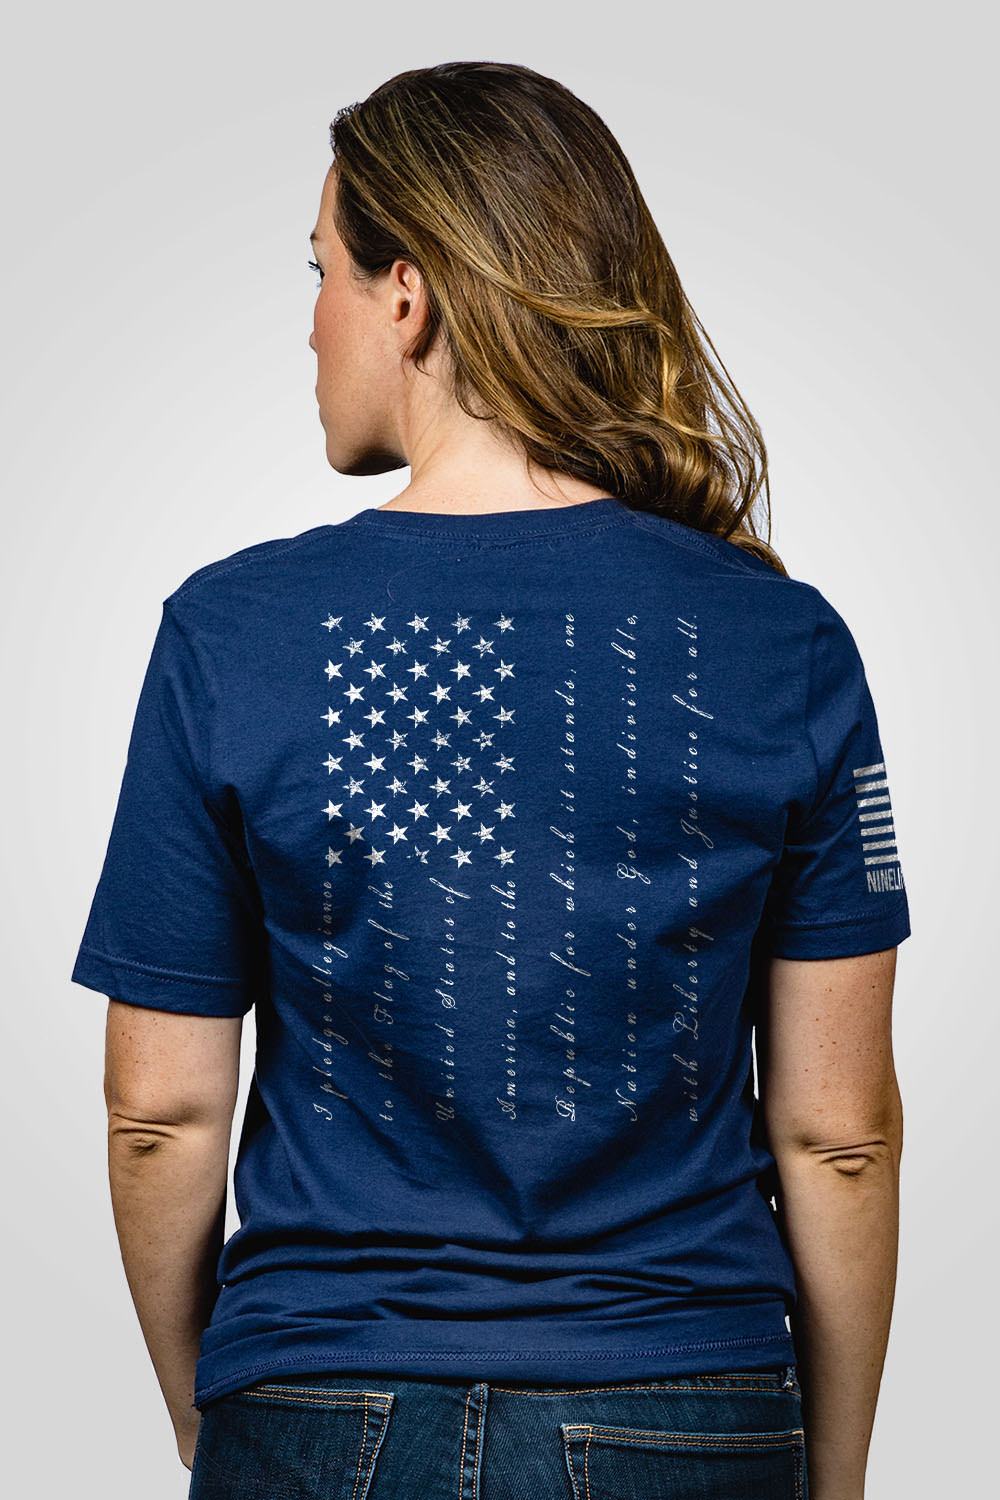 Nine Line Women's Boyfriend Fit T-Shirt - The Pledge posted by ProdOrigin USA in Women's Apparel 